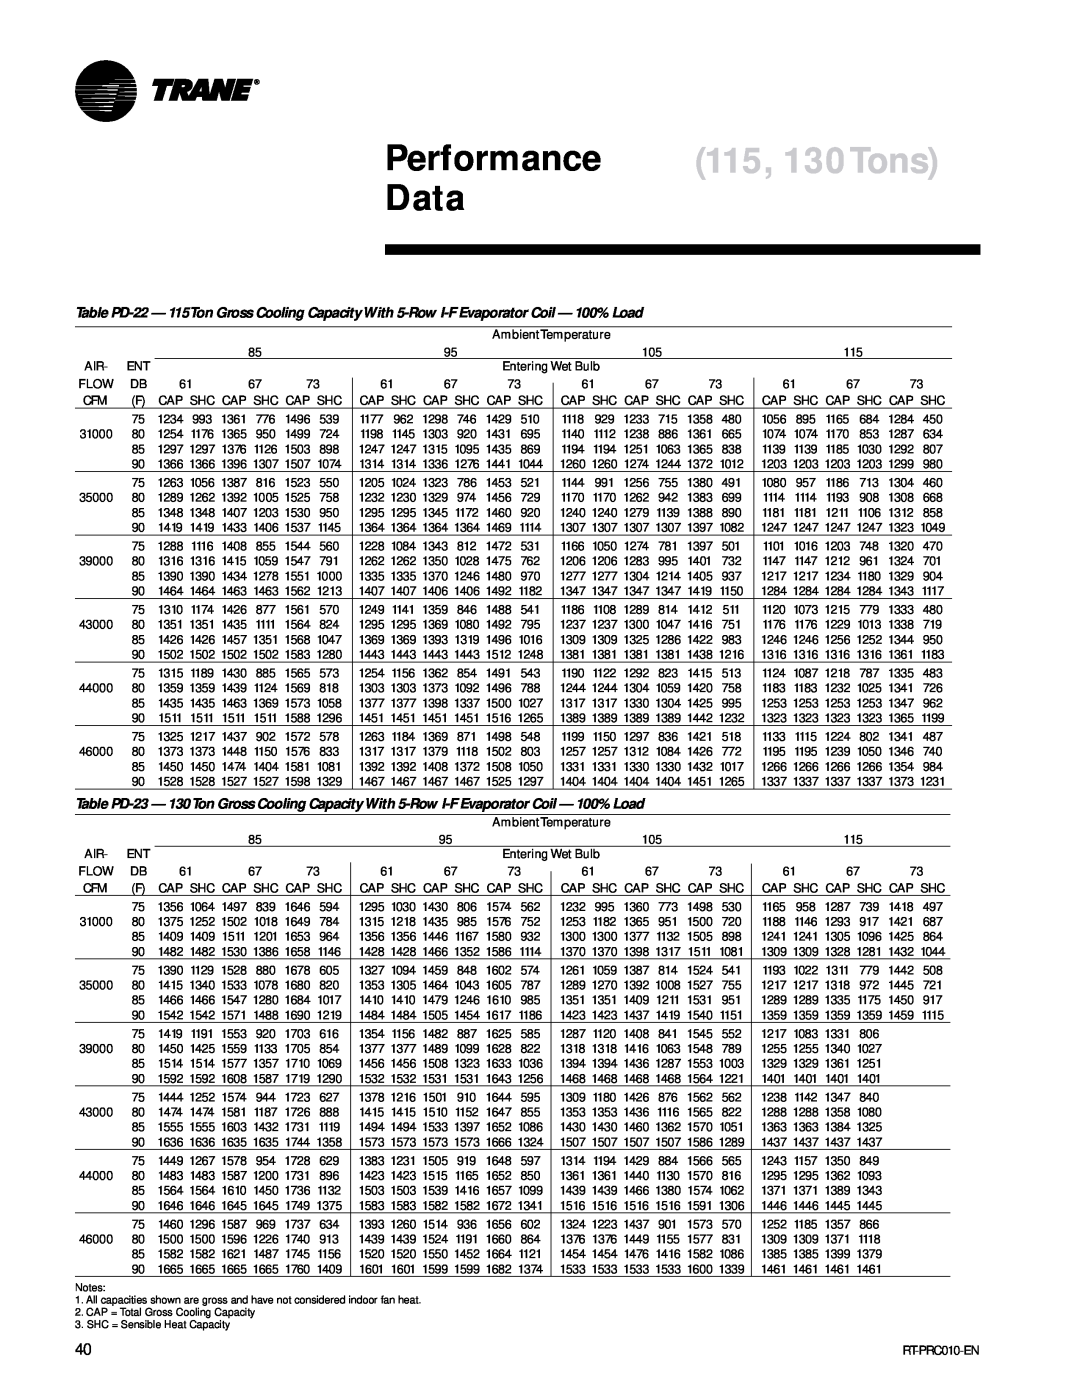 Trane RT-PRC010-EN manual Performance, 115, 130Tons, Data 